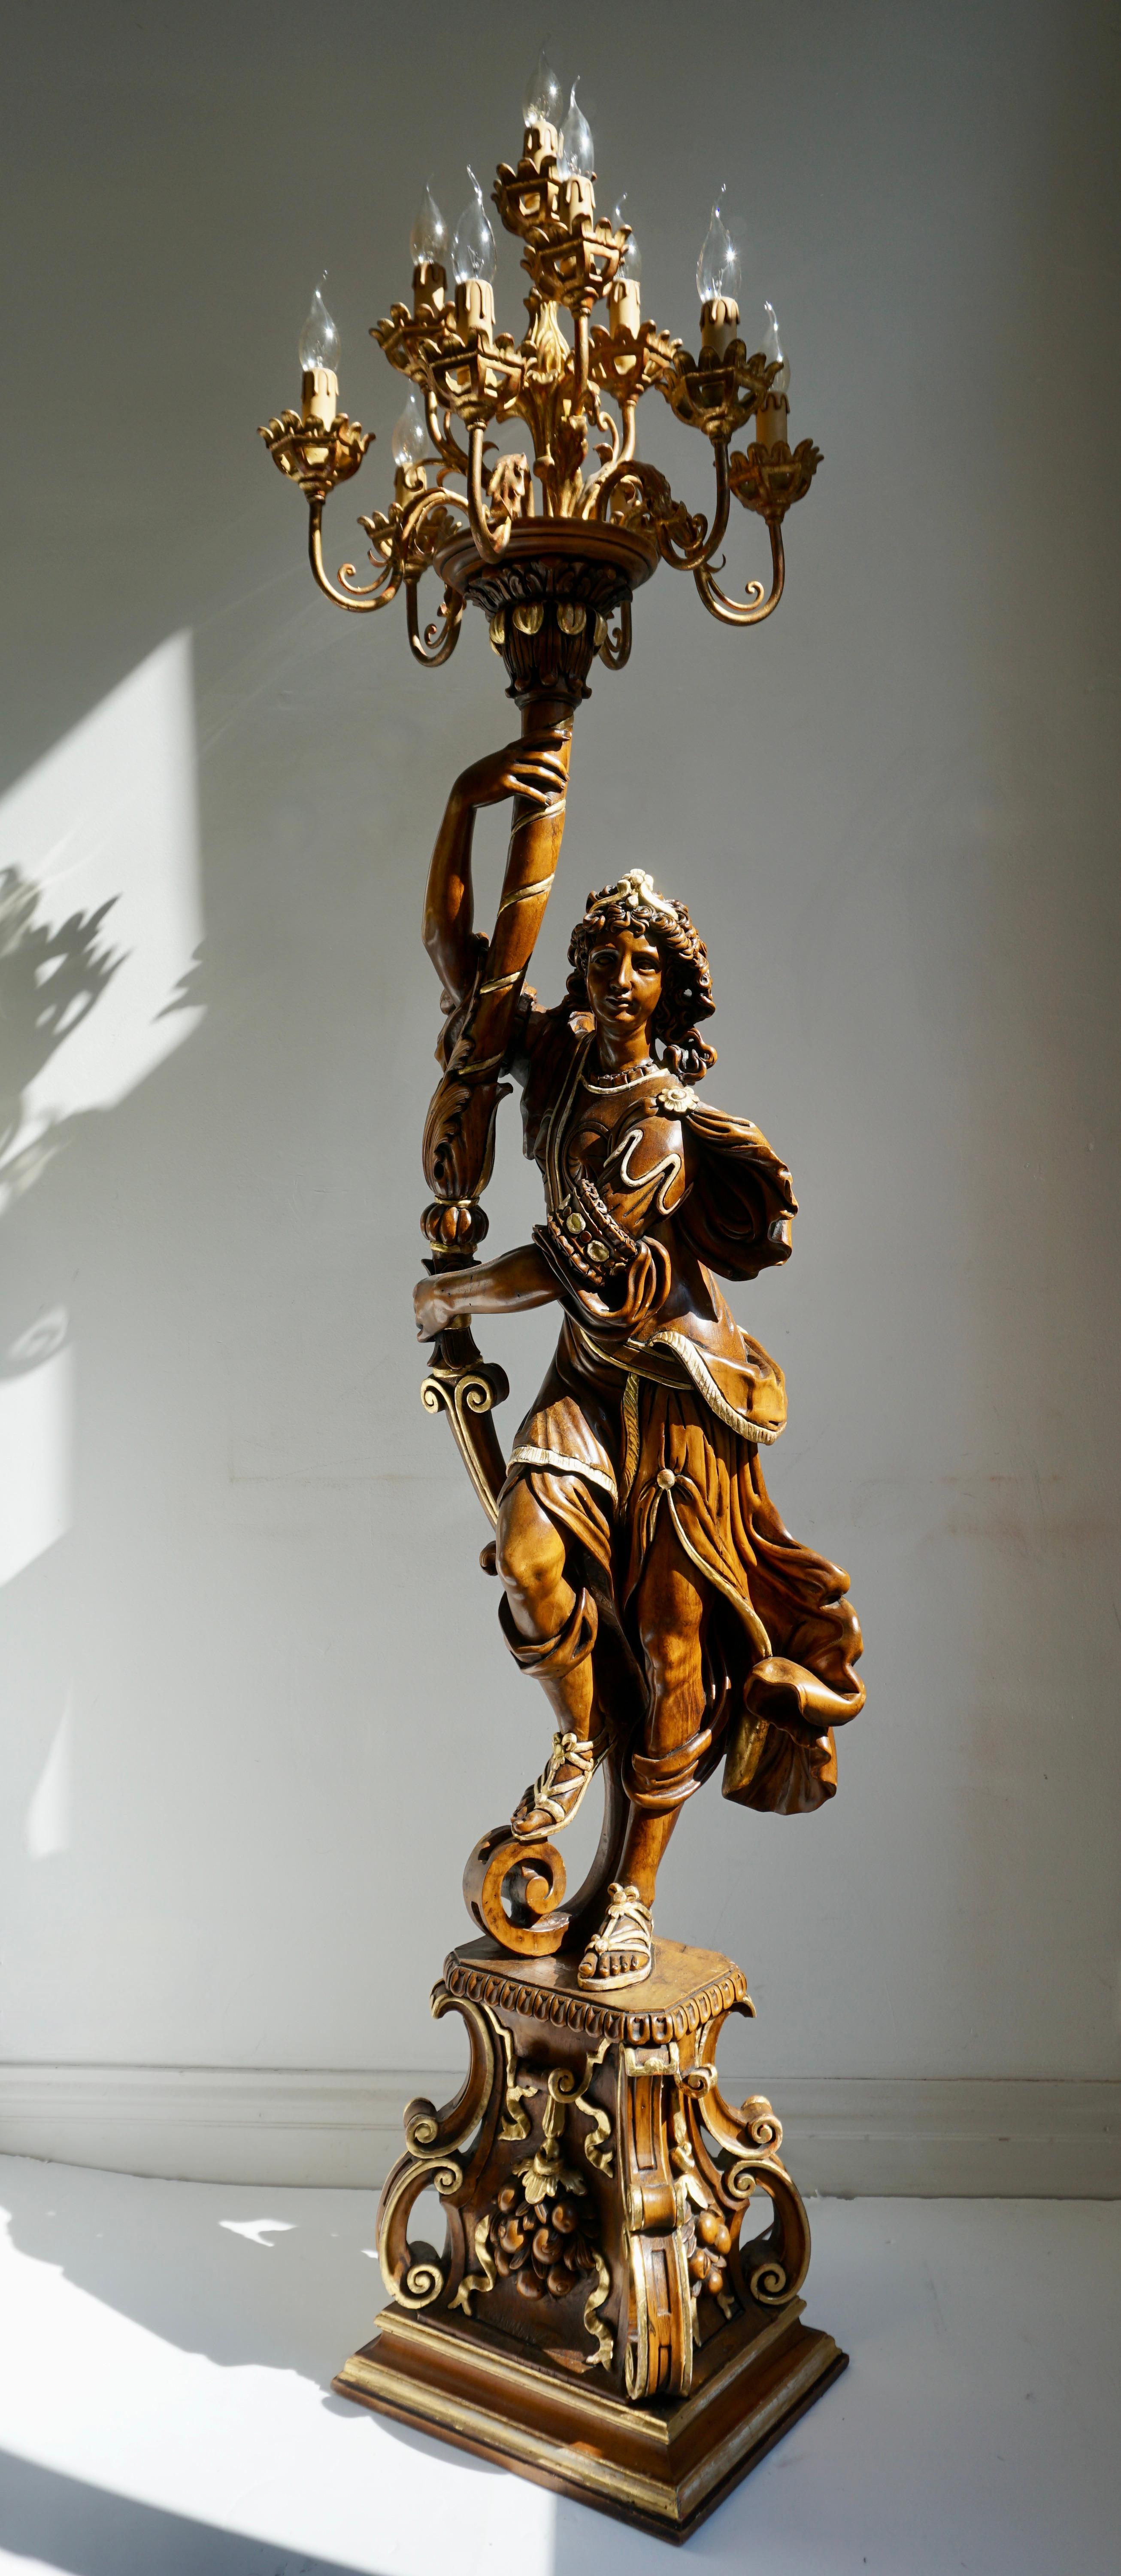 Hollywood Regency Italian Gilded Wood Venetian Figural Torchère Candelabra Floor Lamp For Sale